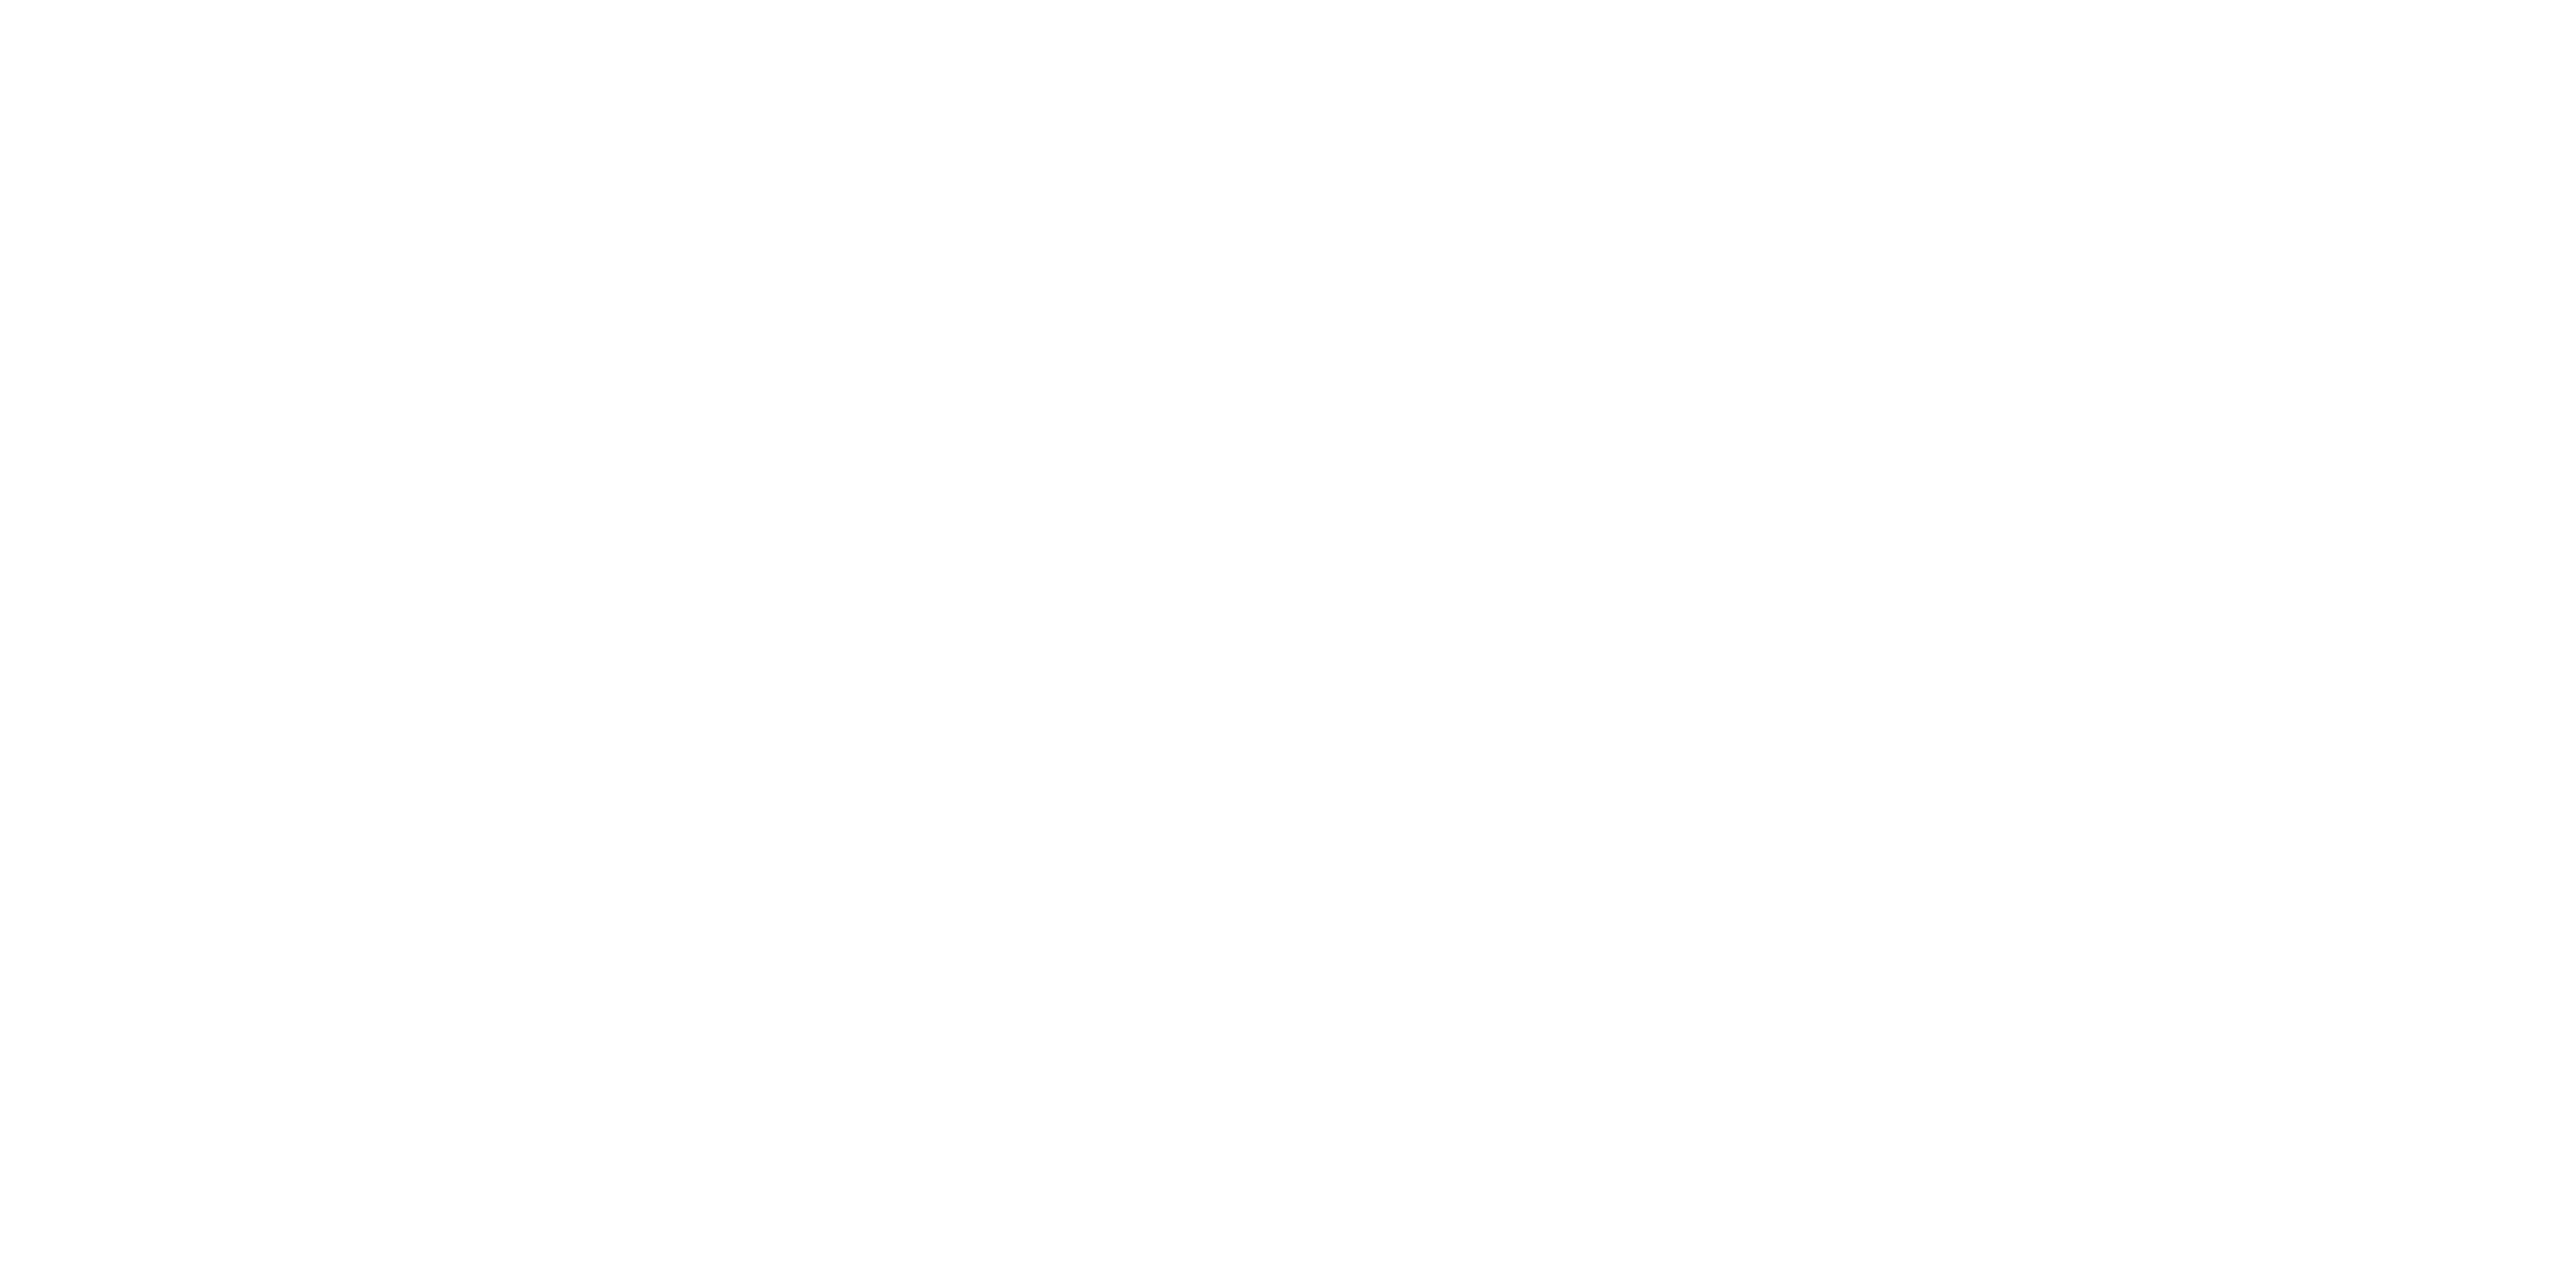 Logo azienda Trimero Living